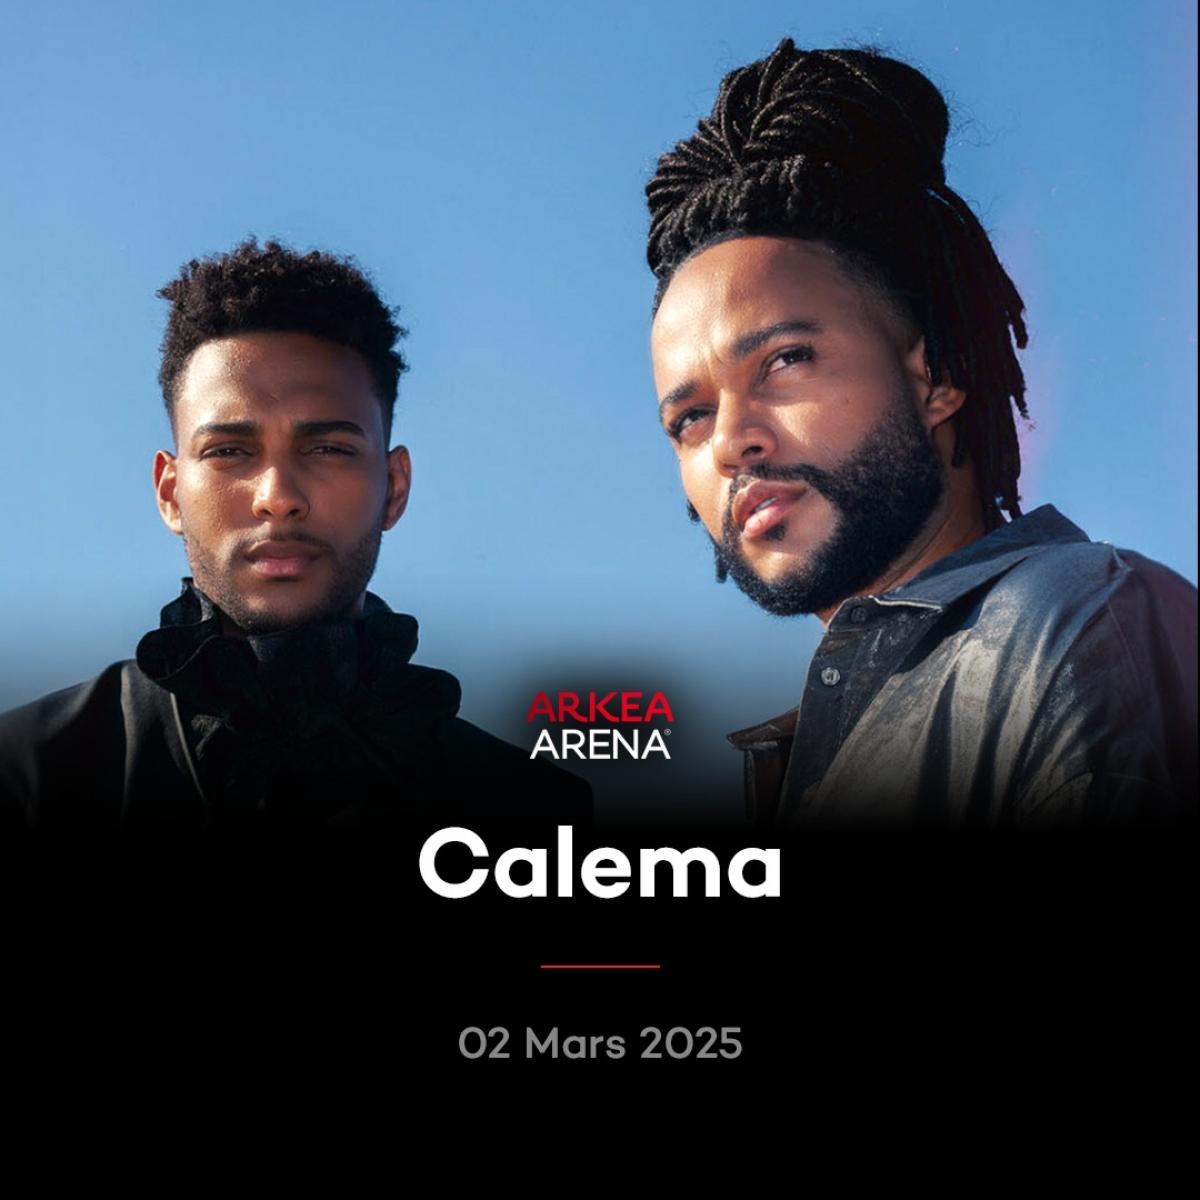 Calema en Arkea Arena Tickets